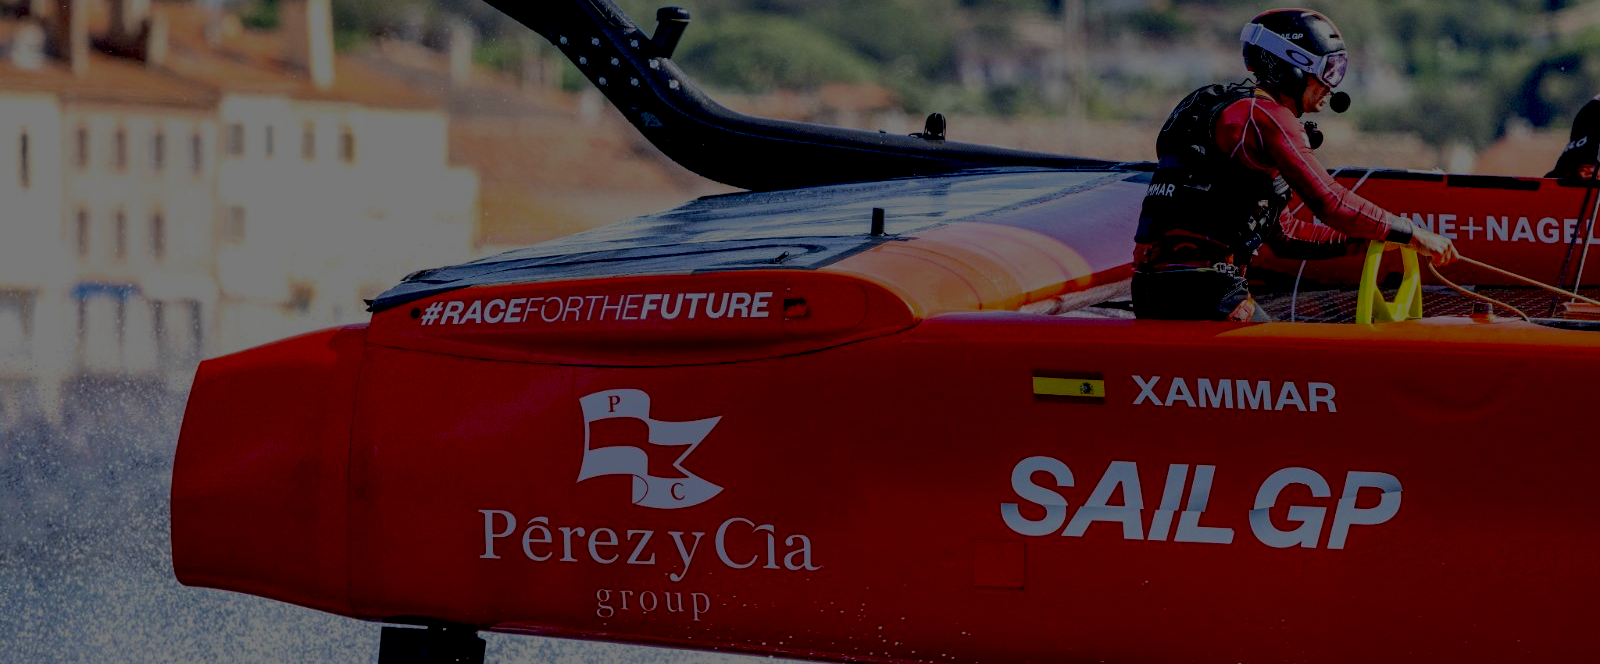 Pérez y Cía. Group confirm a sponsorship deal with the Spain SailGP team until Season 5